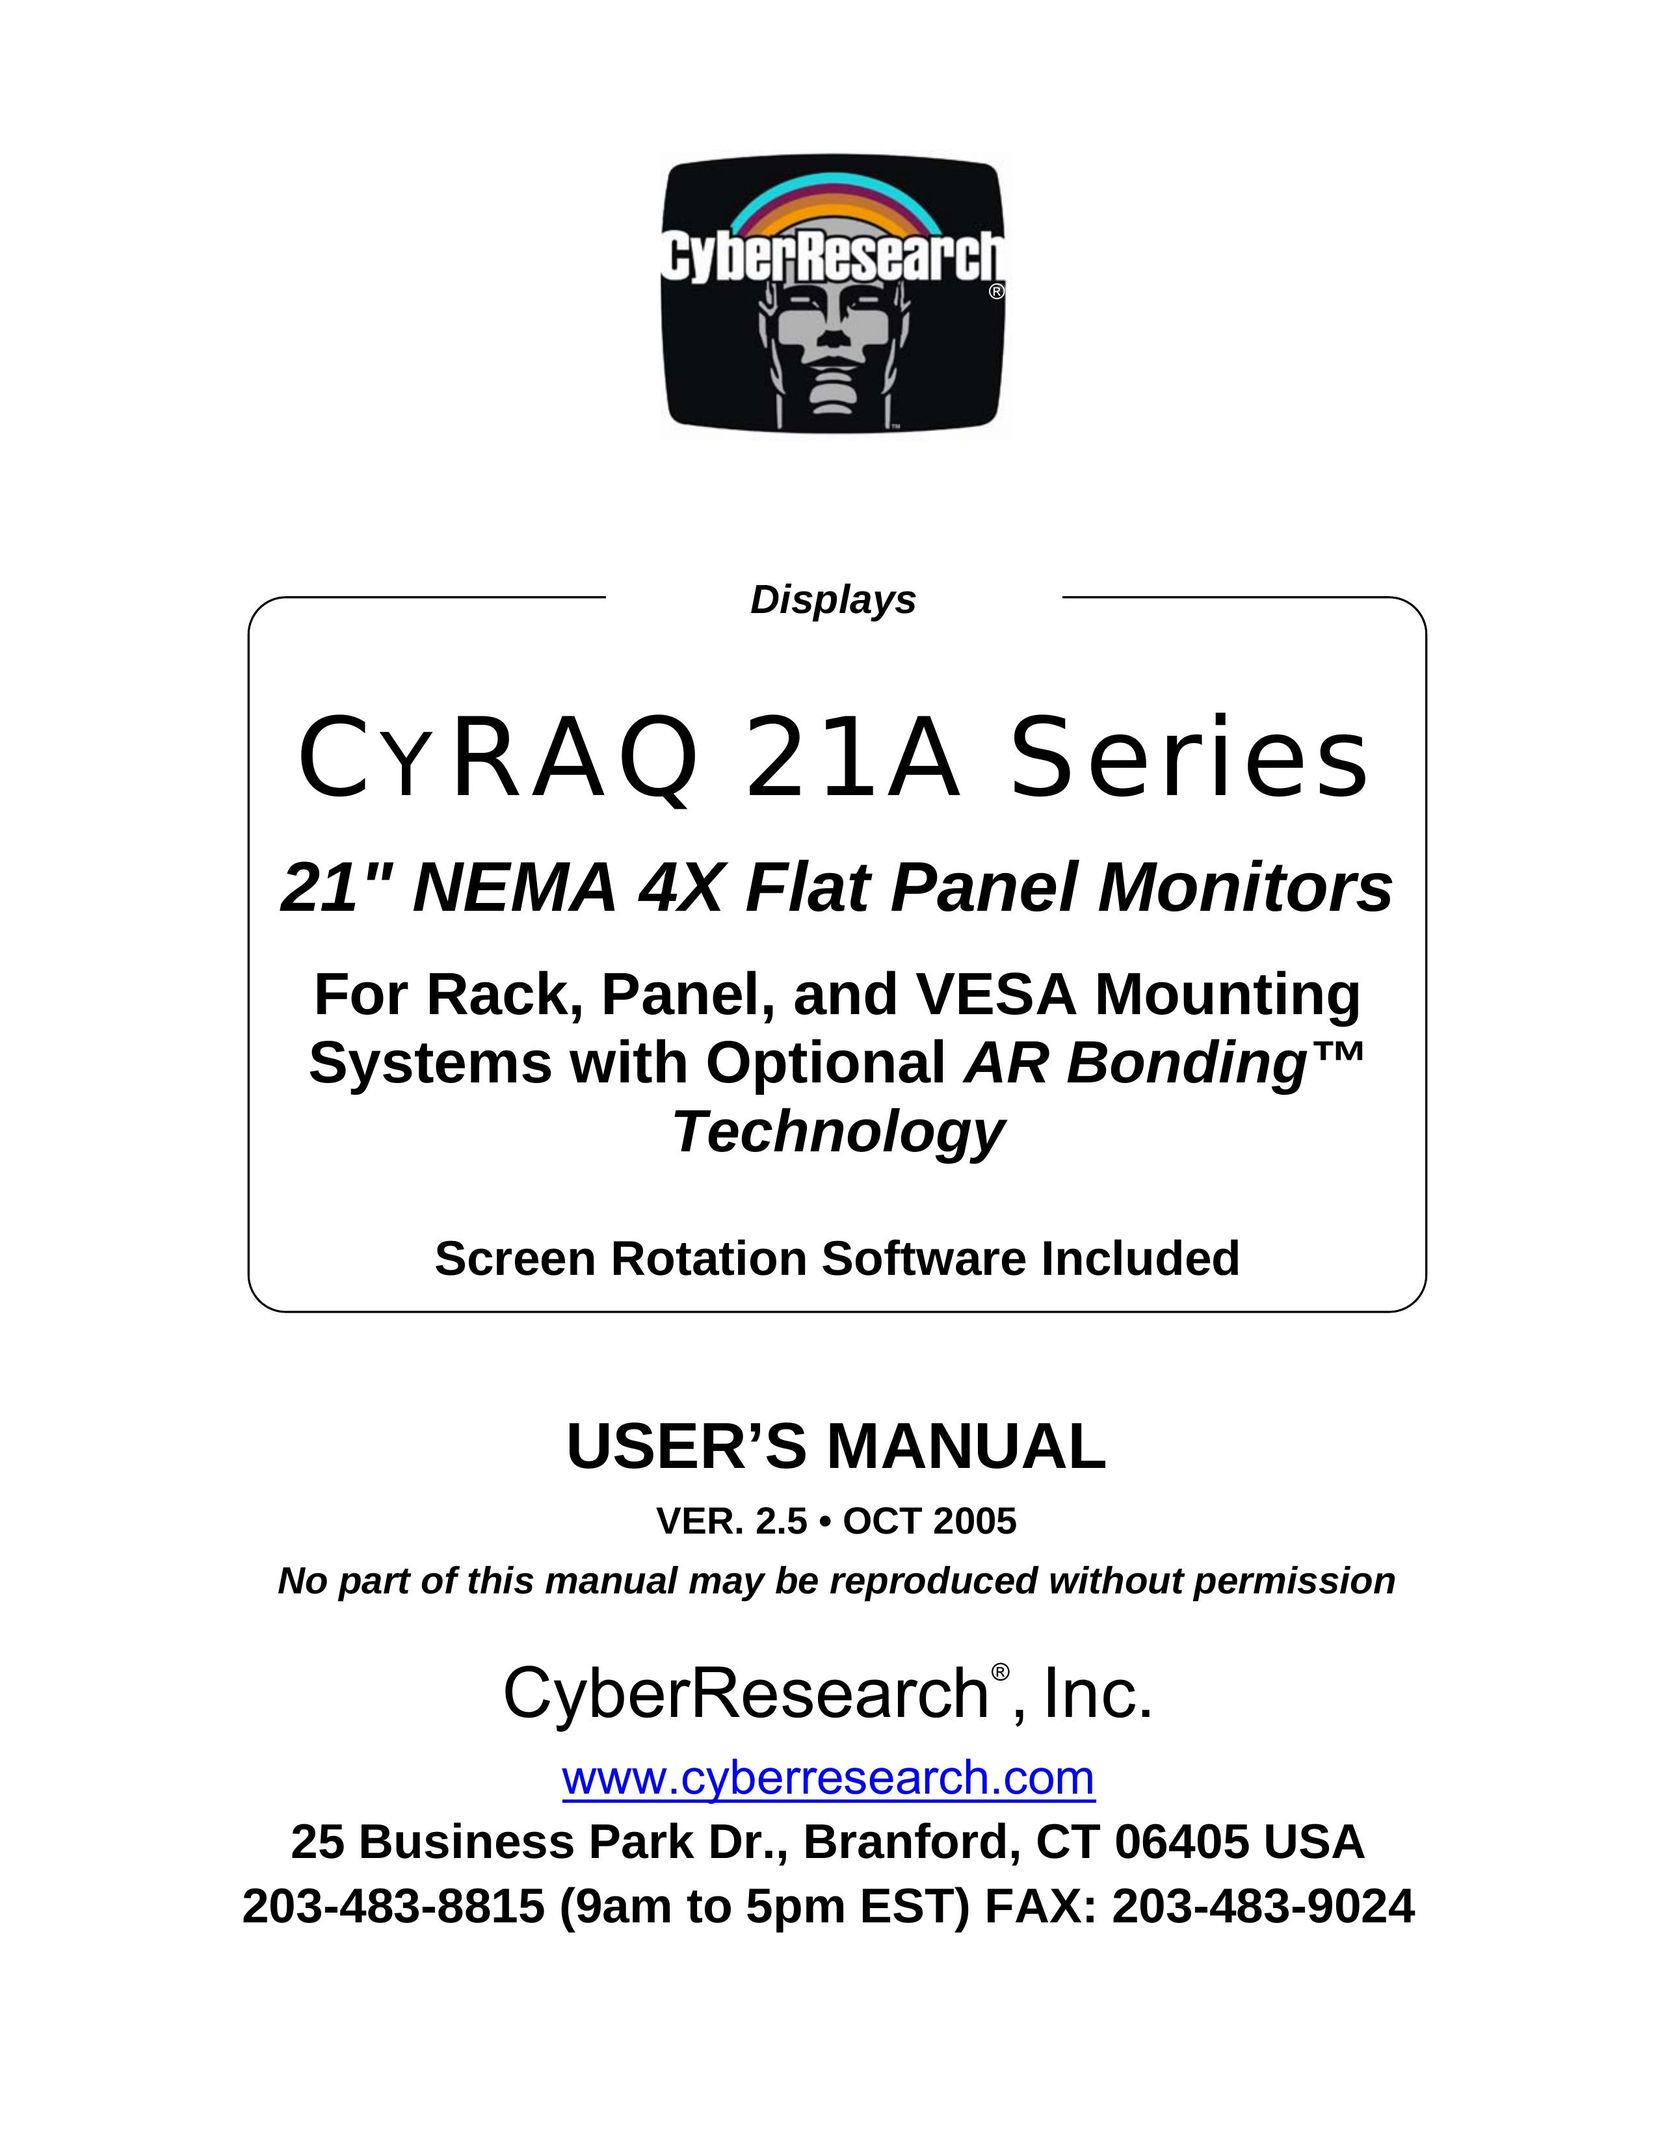 CyberResearch CYRAQ 21A Computer Monitor User Manual